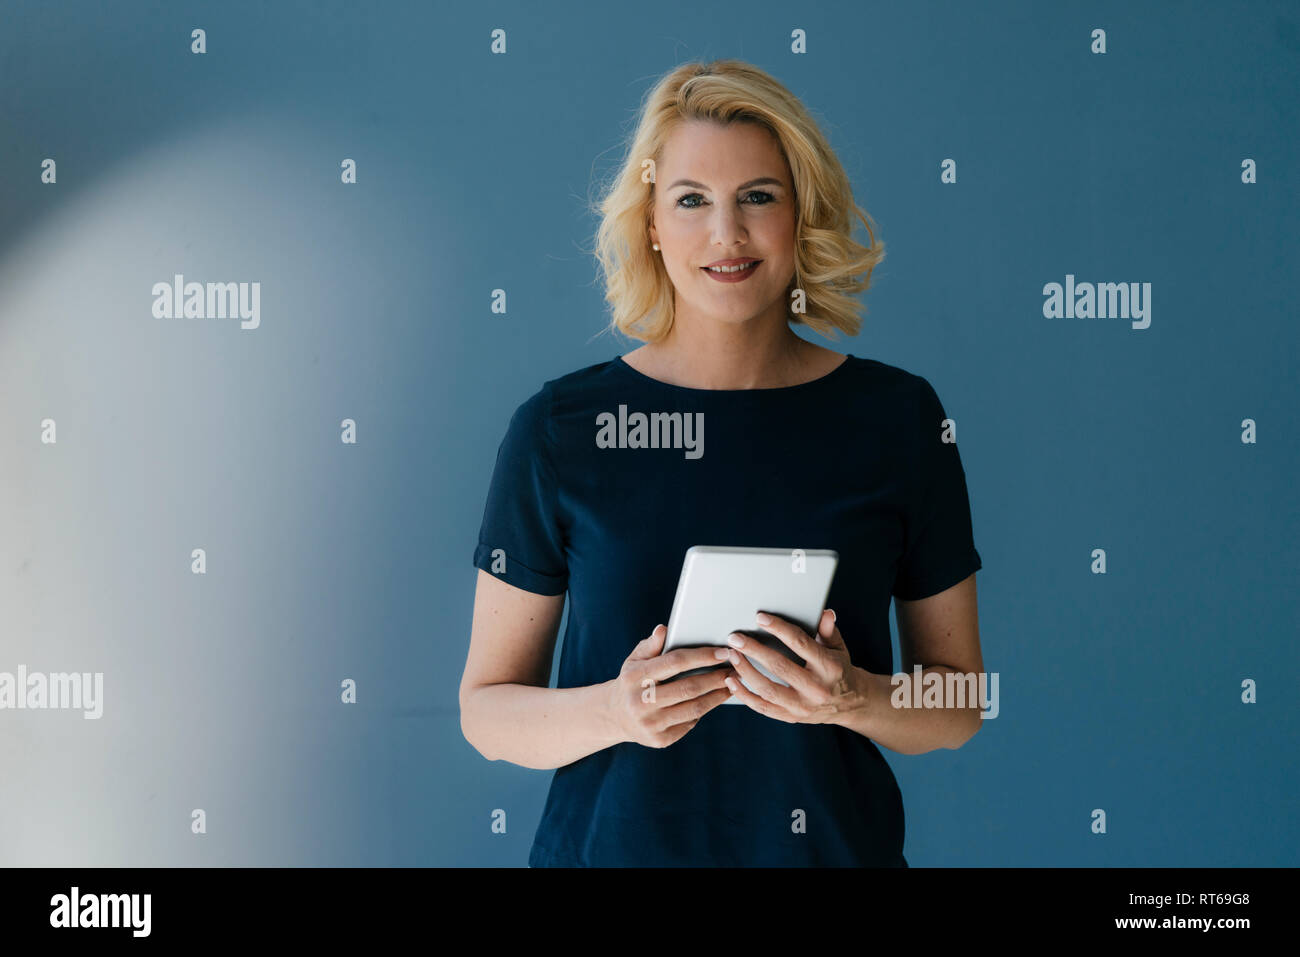 Portrait of smiling blond woman holding tablet Banque D'Images